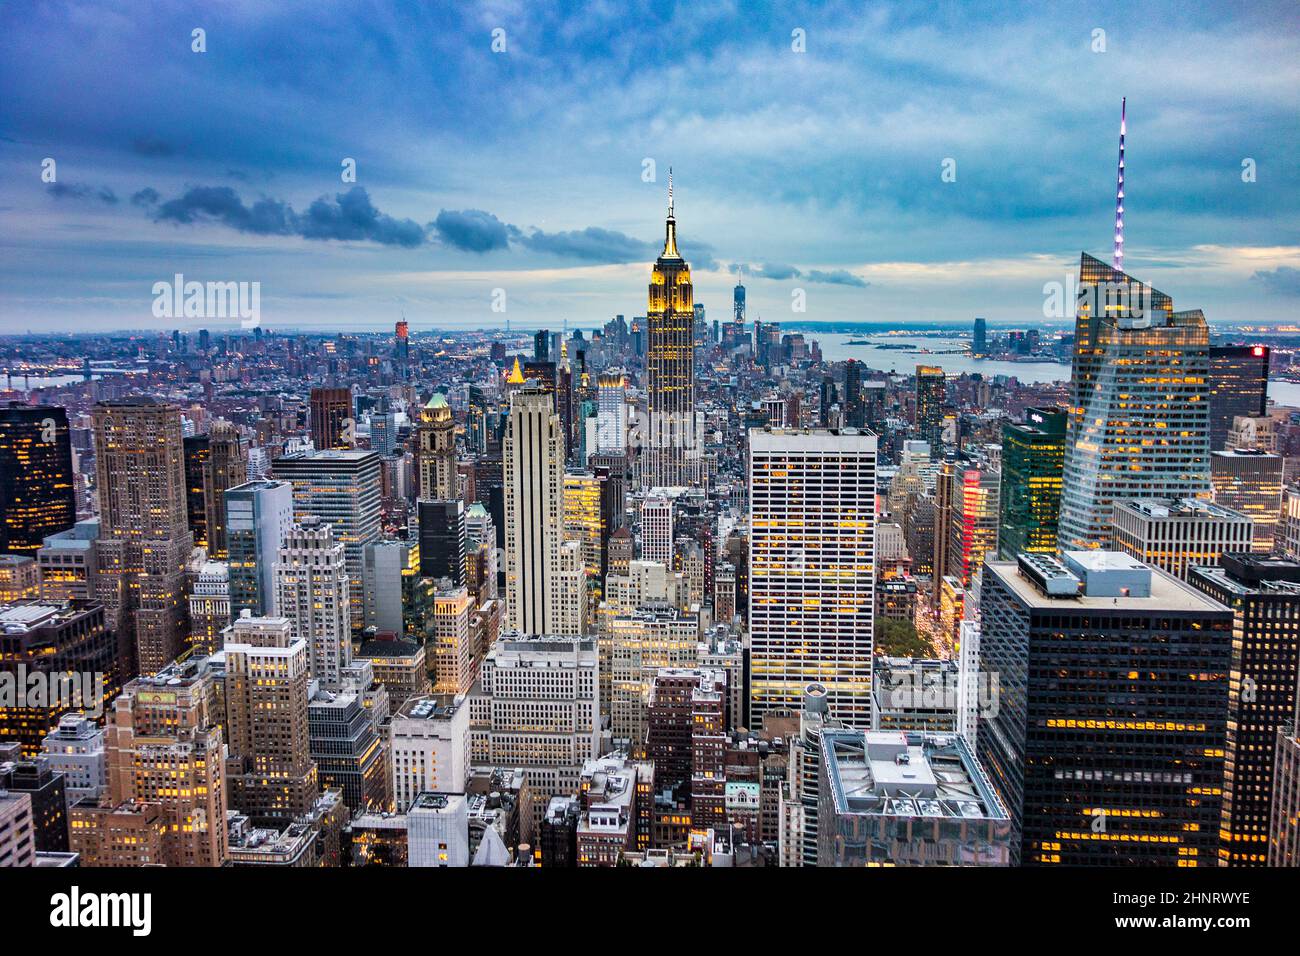 skyline of New York by night Stock Photo